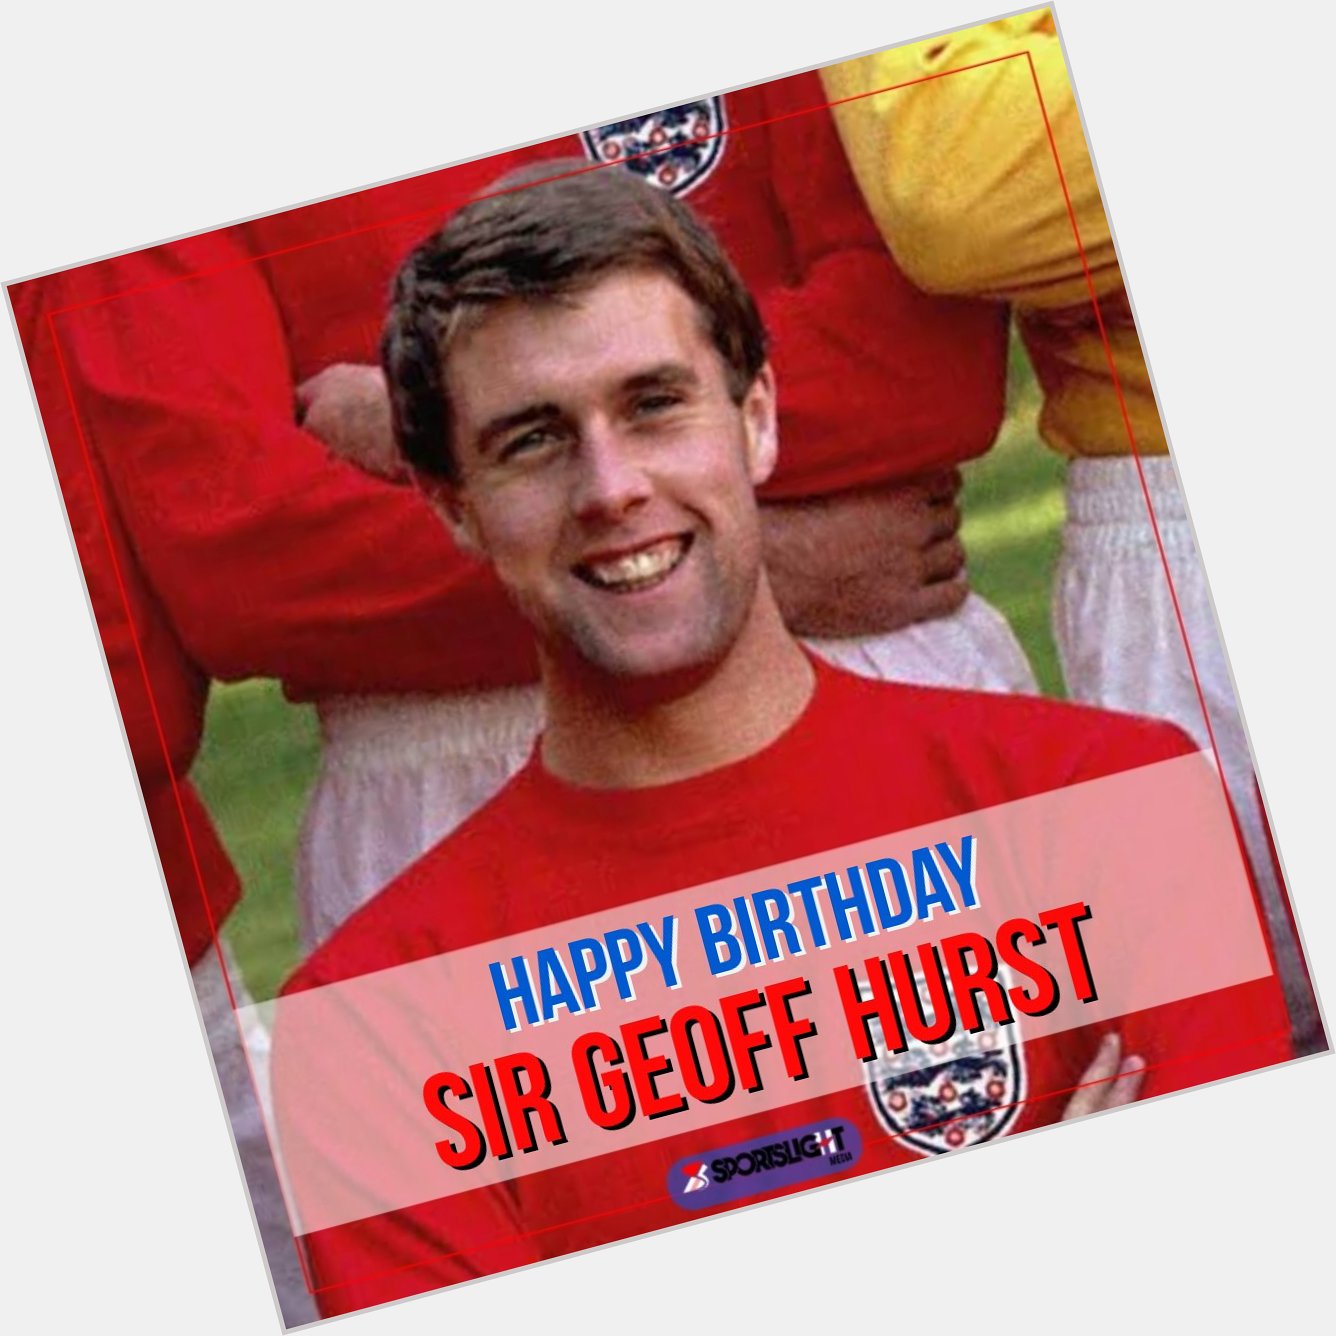 Happy Birthday SIR GEOFF HURST  !!!    